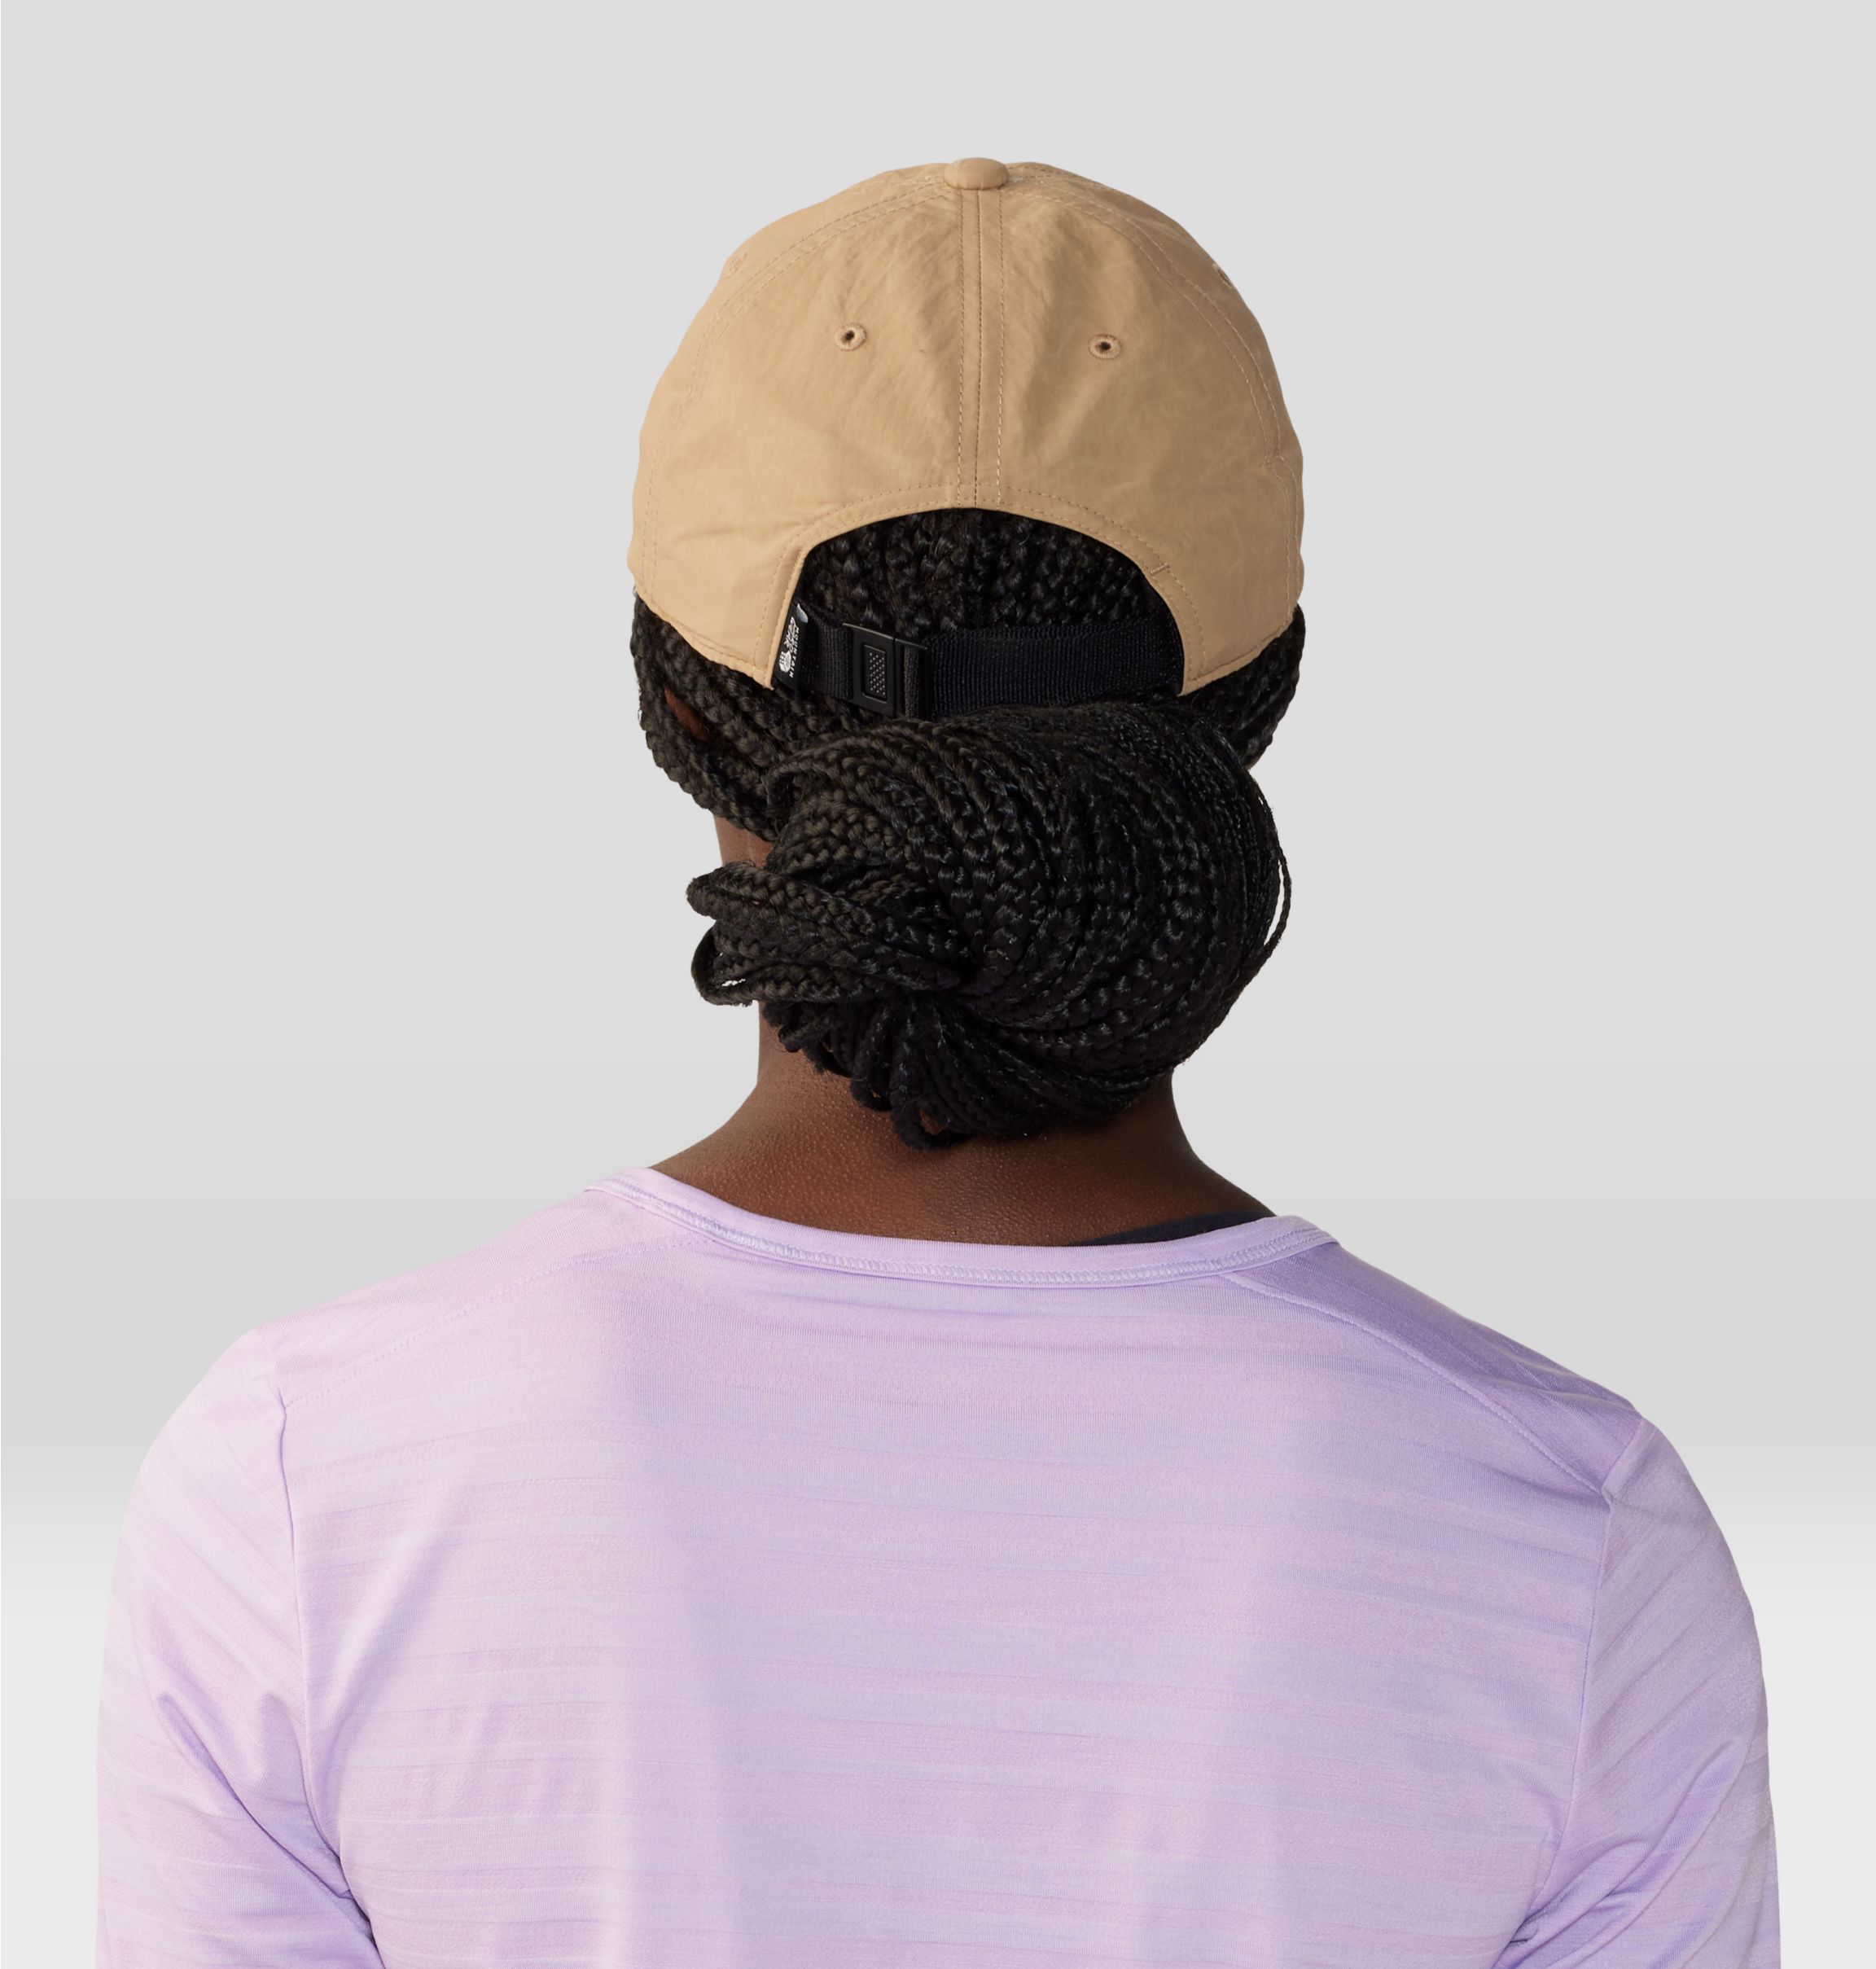 Mountain Hardwear Stryder™ Sun Hat Man